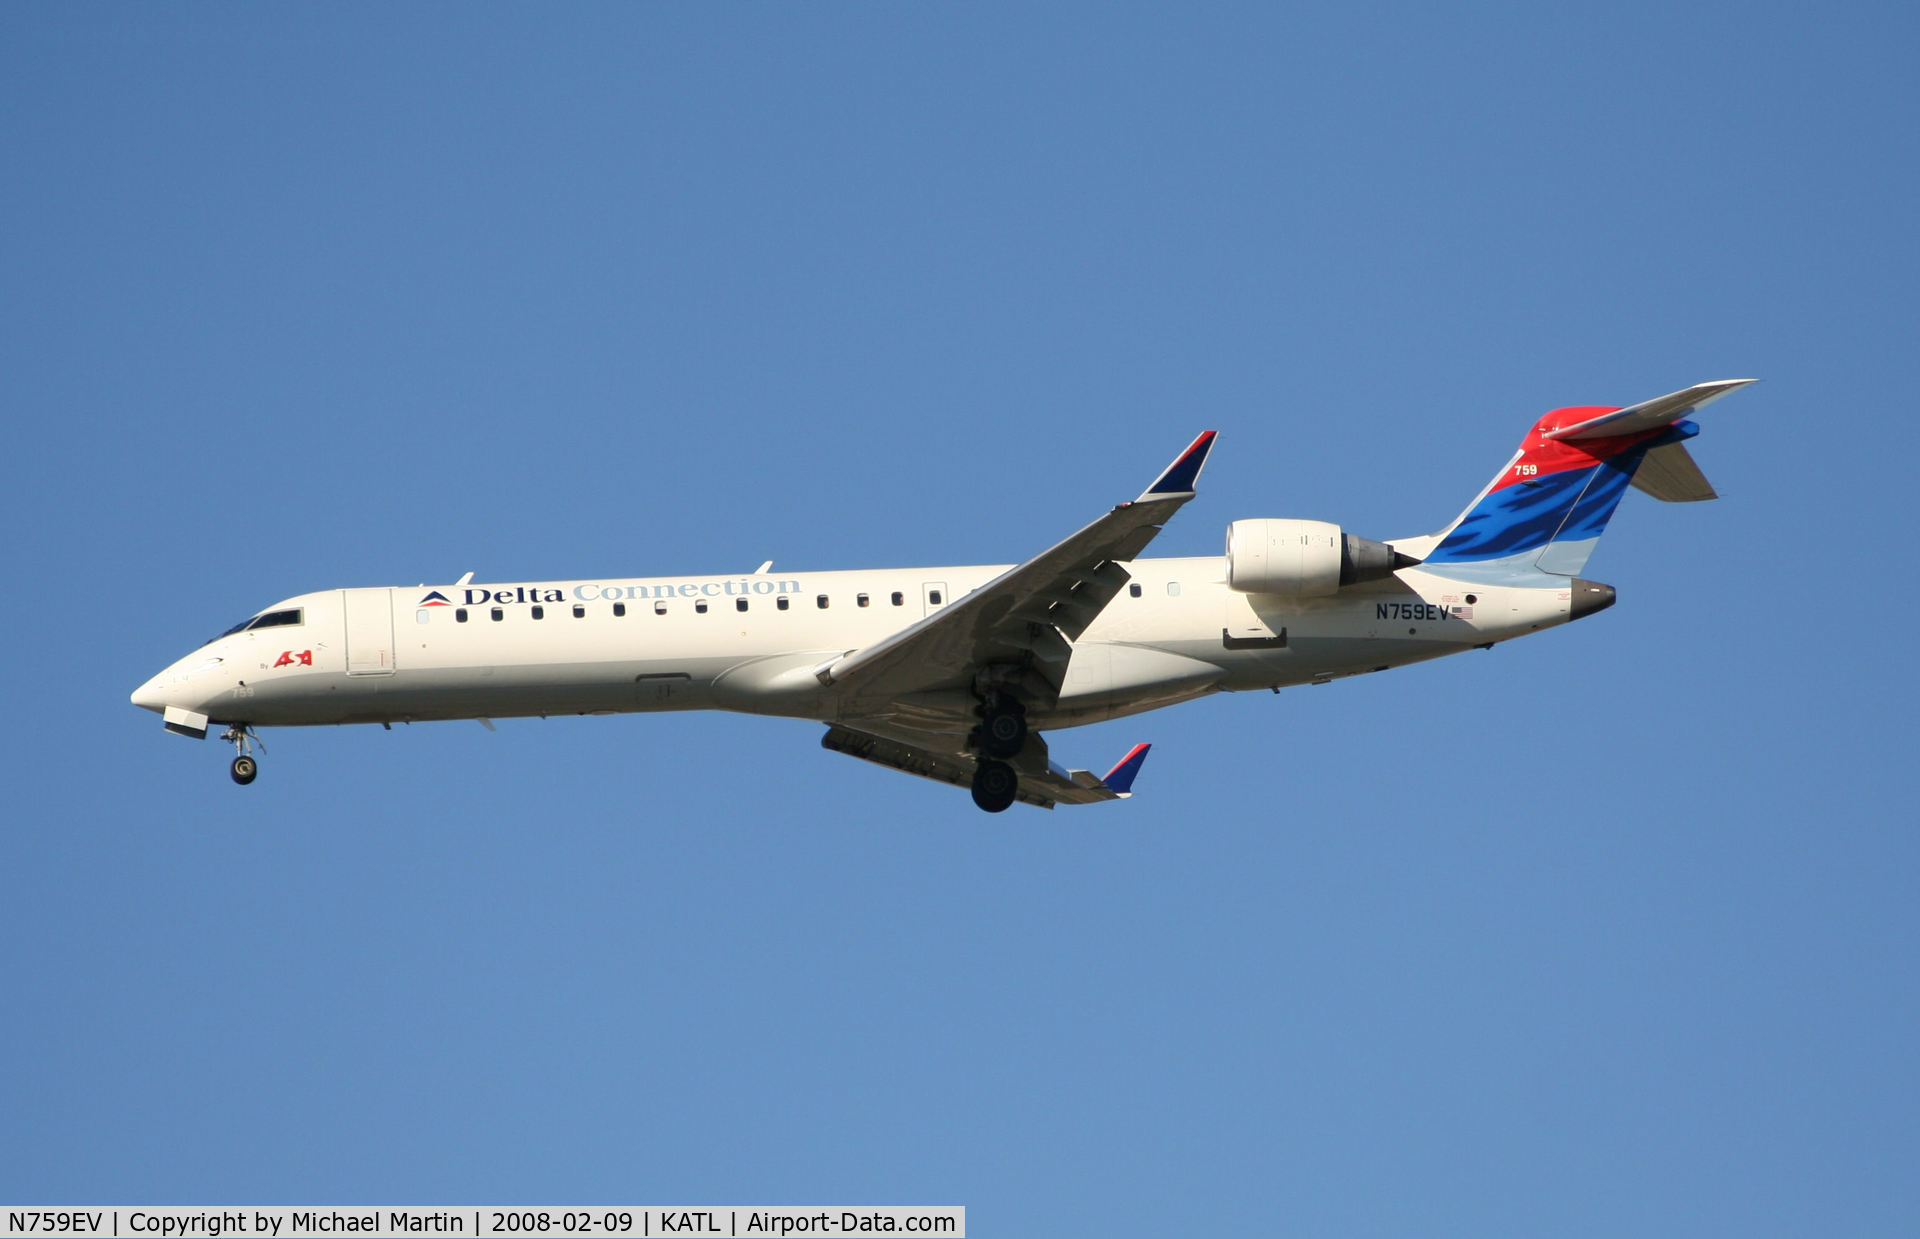 N759EV, 2005 Bombardier CRJ-700 (CL-600-2C10) Regional Jet C/N 10211, Short Final for 26R